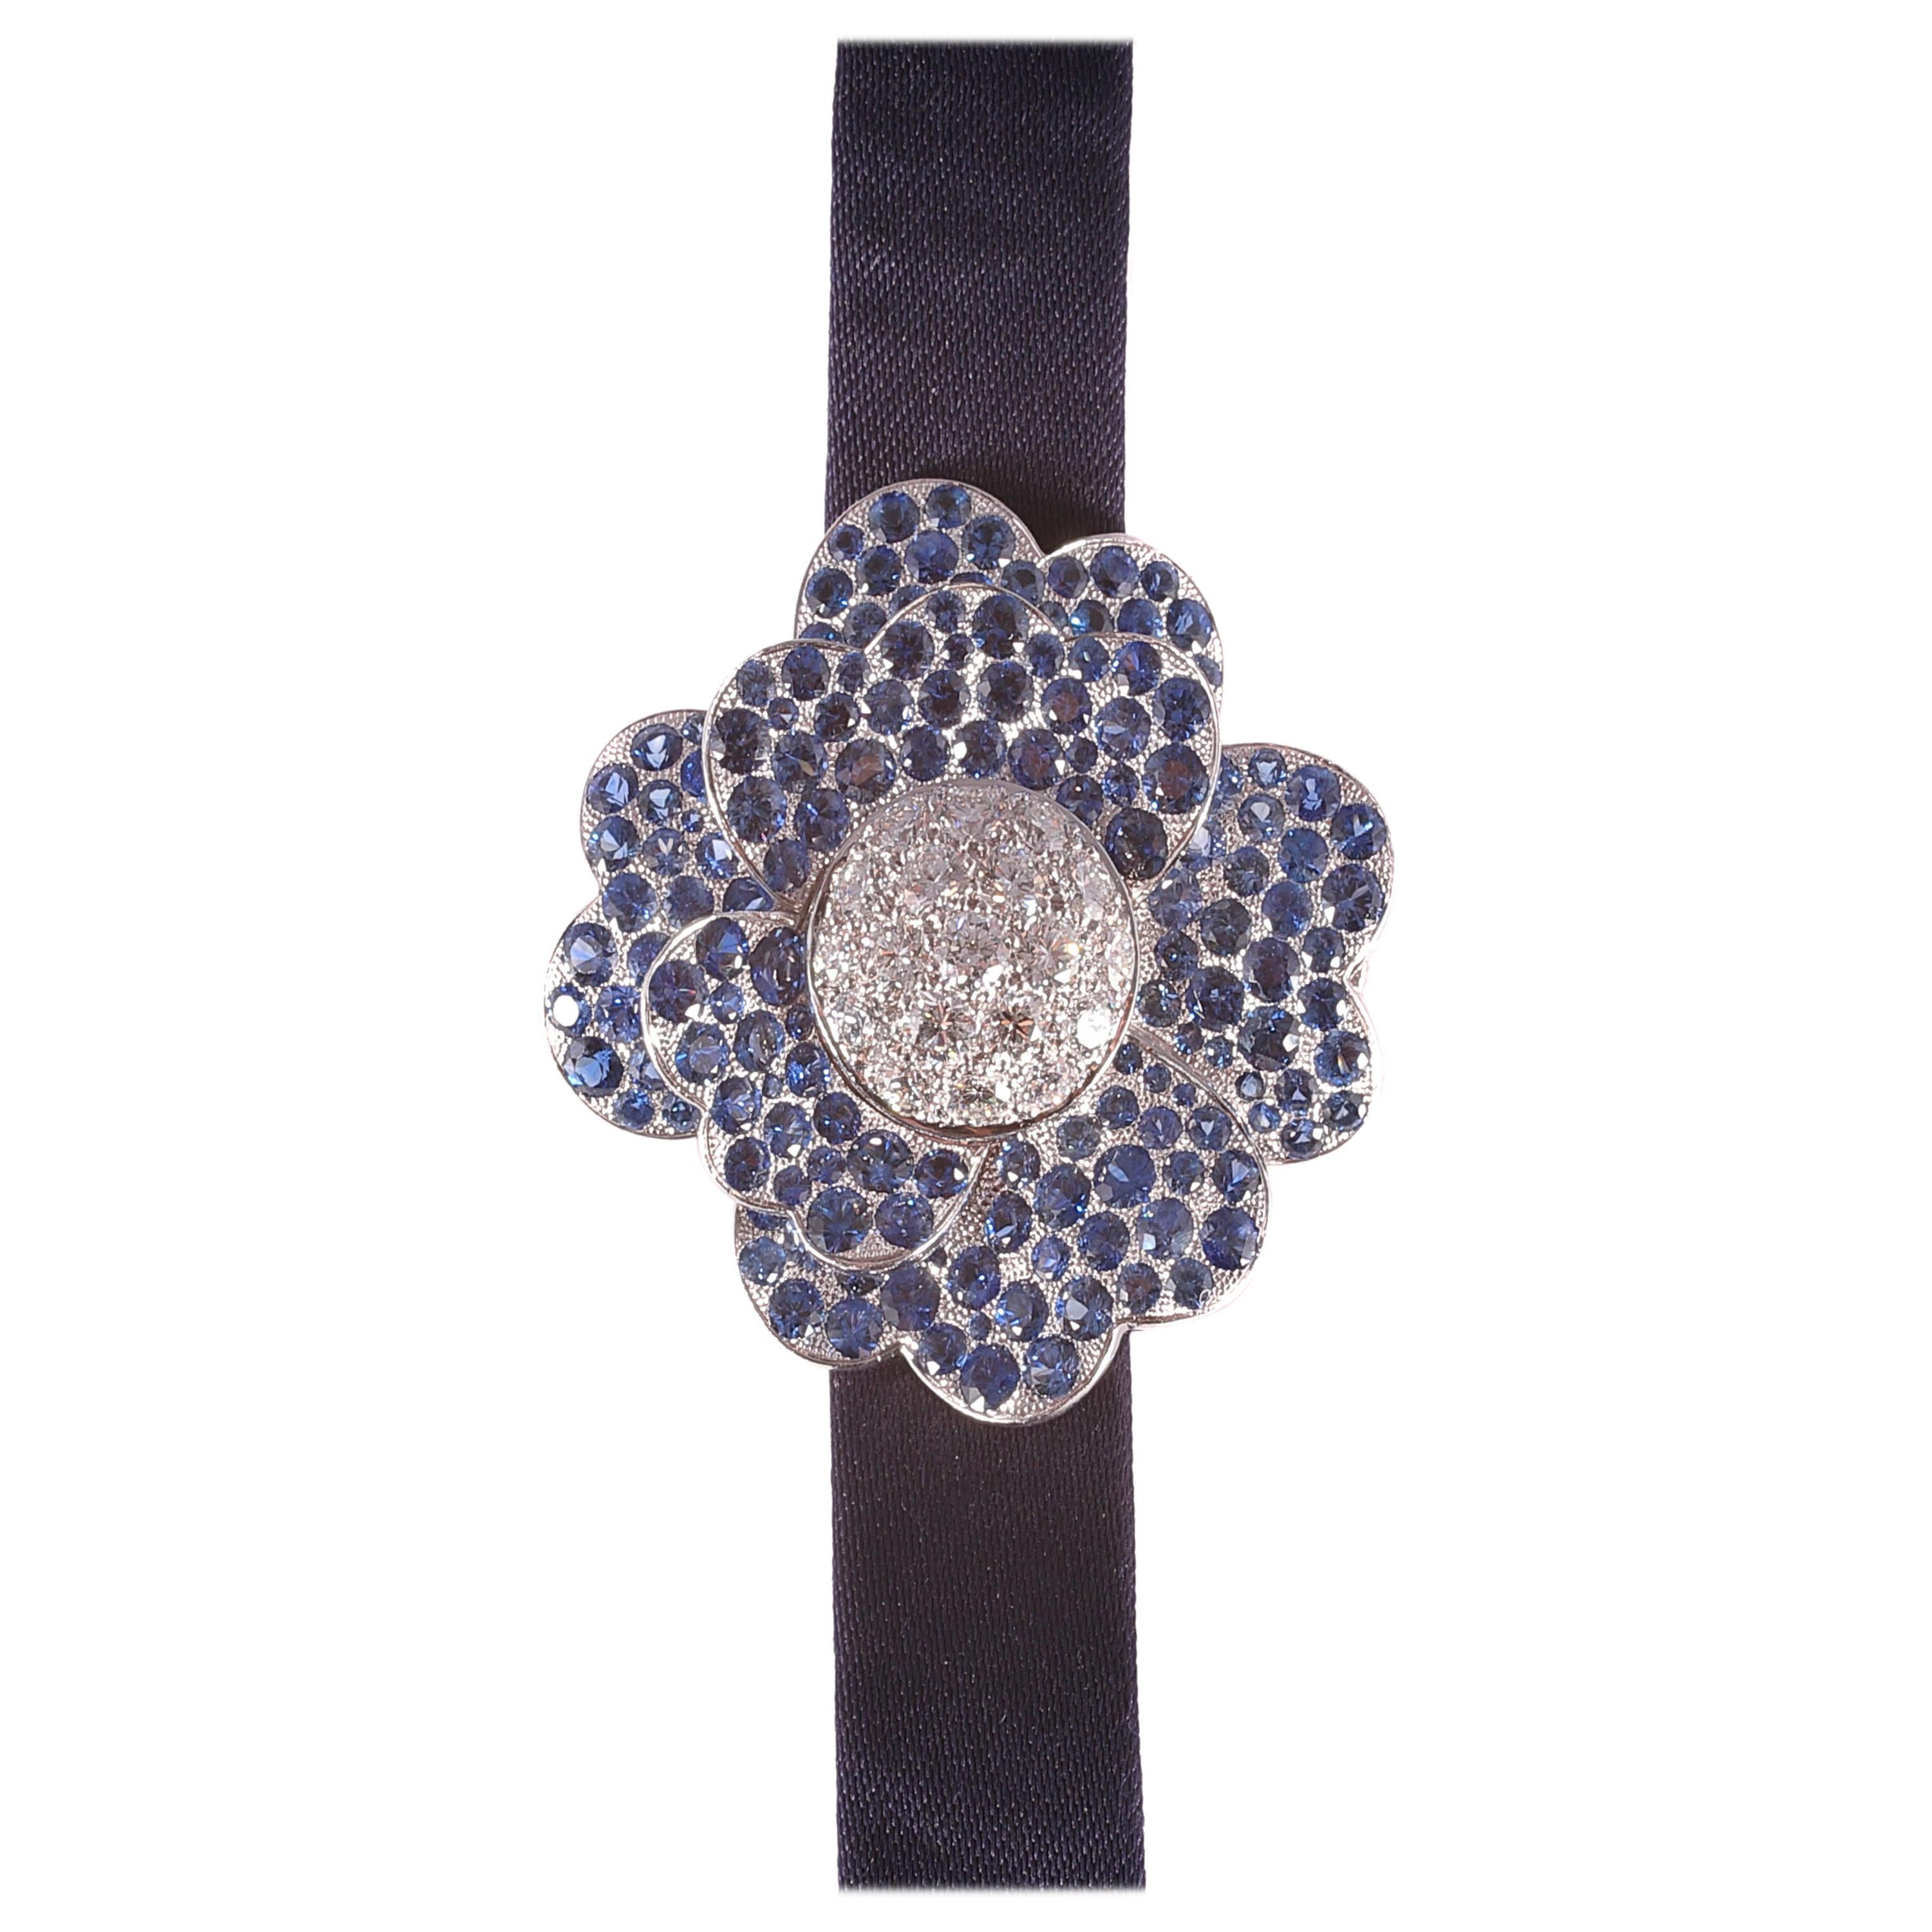 7.06 Carat Blue Sapphire and 3.32 Carat Diamond Van Cleef & Arpels Cosmos Watch For Sale